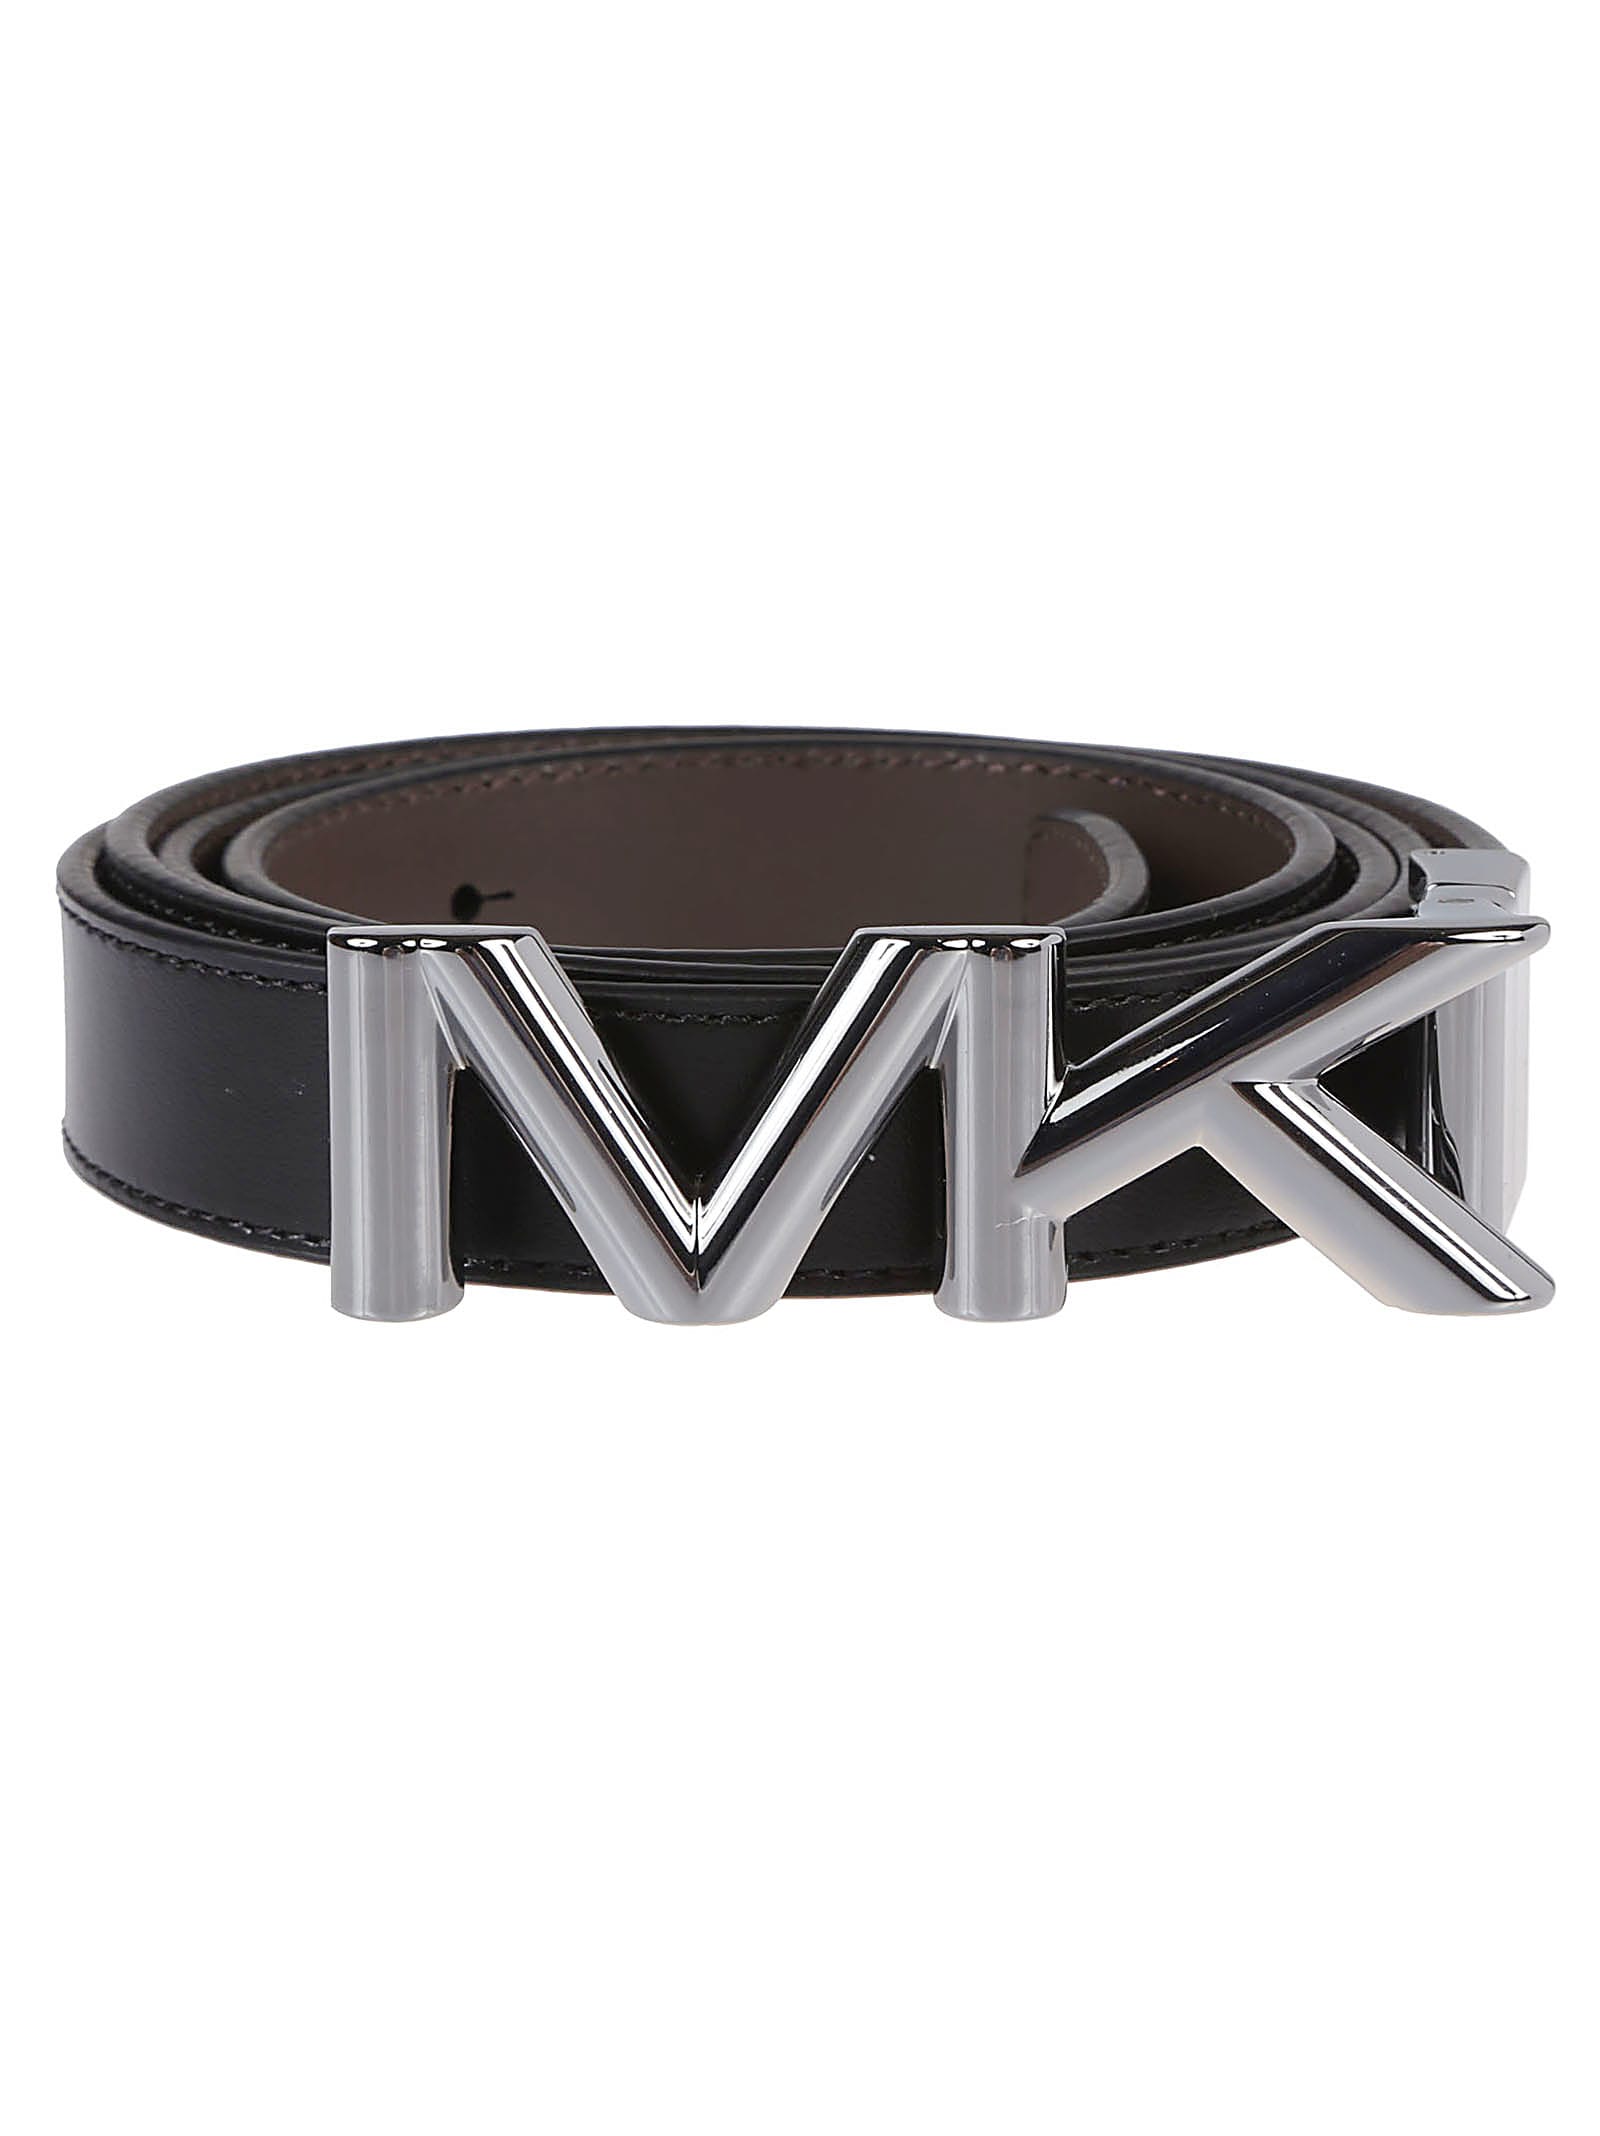 Michael Kors Reversible Belt